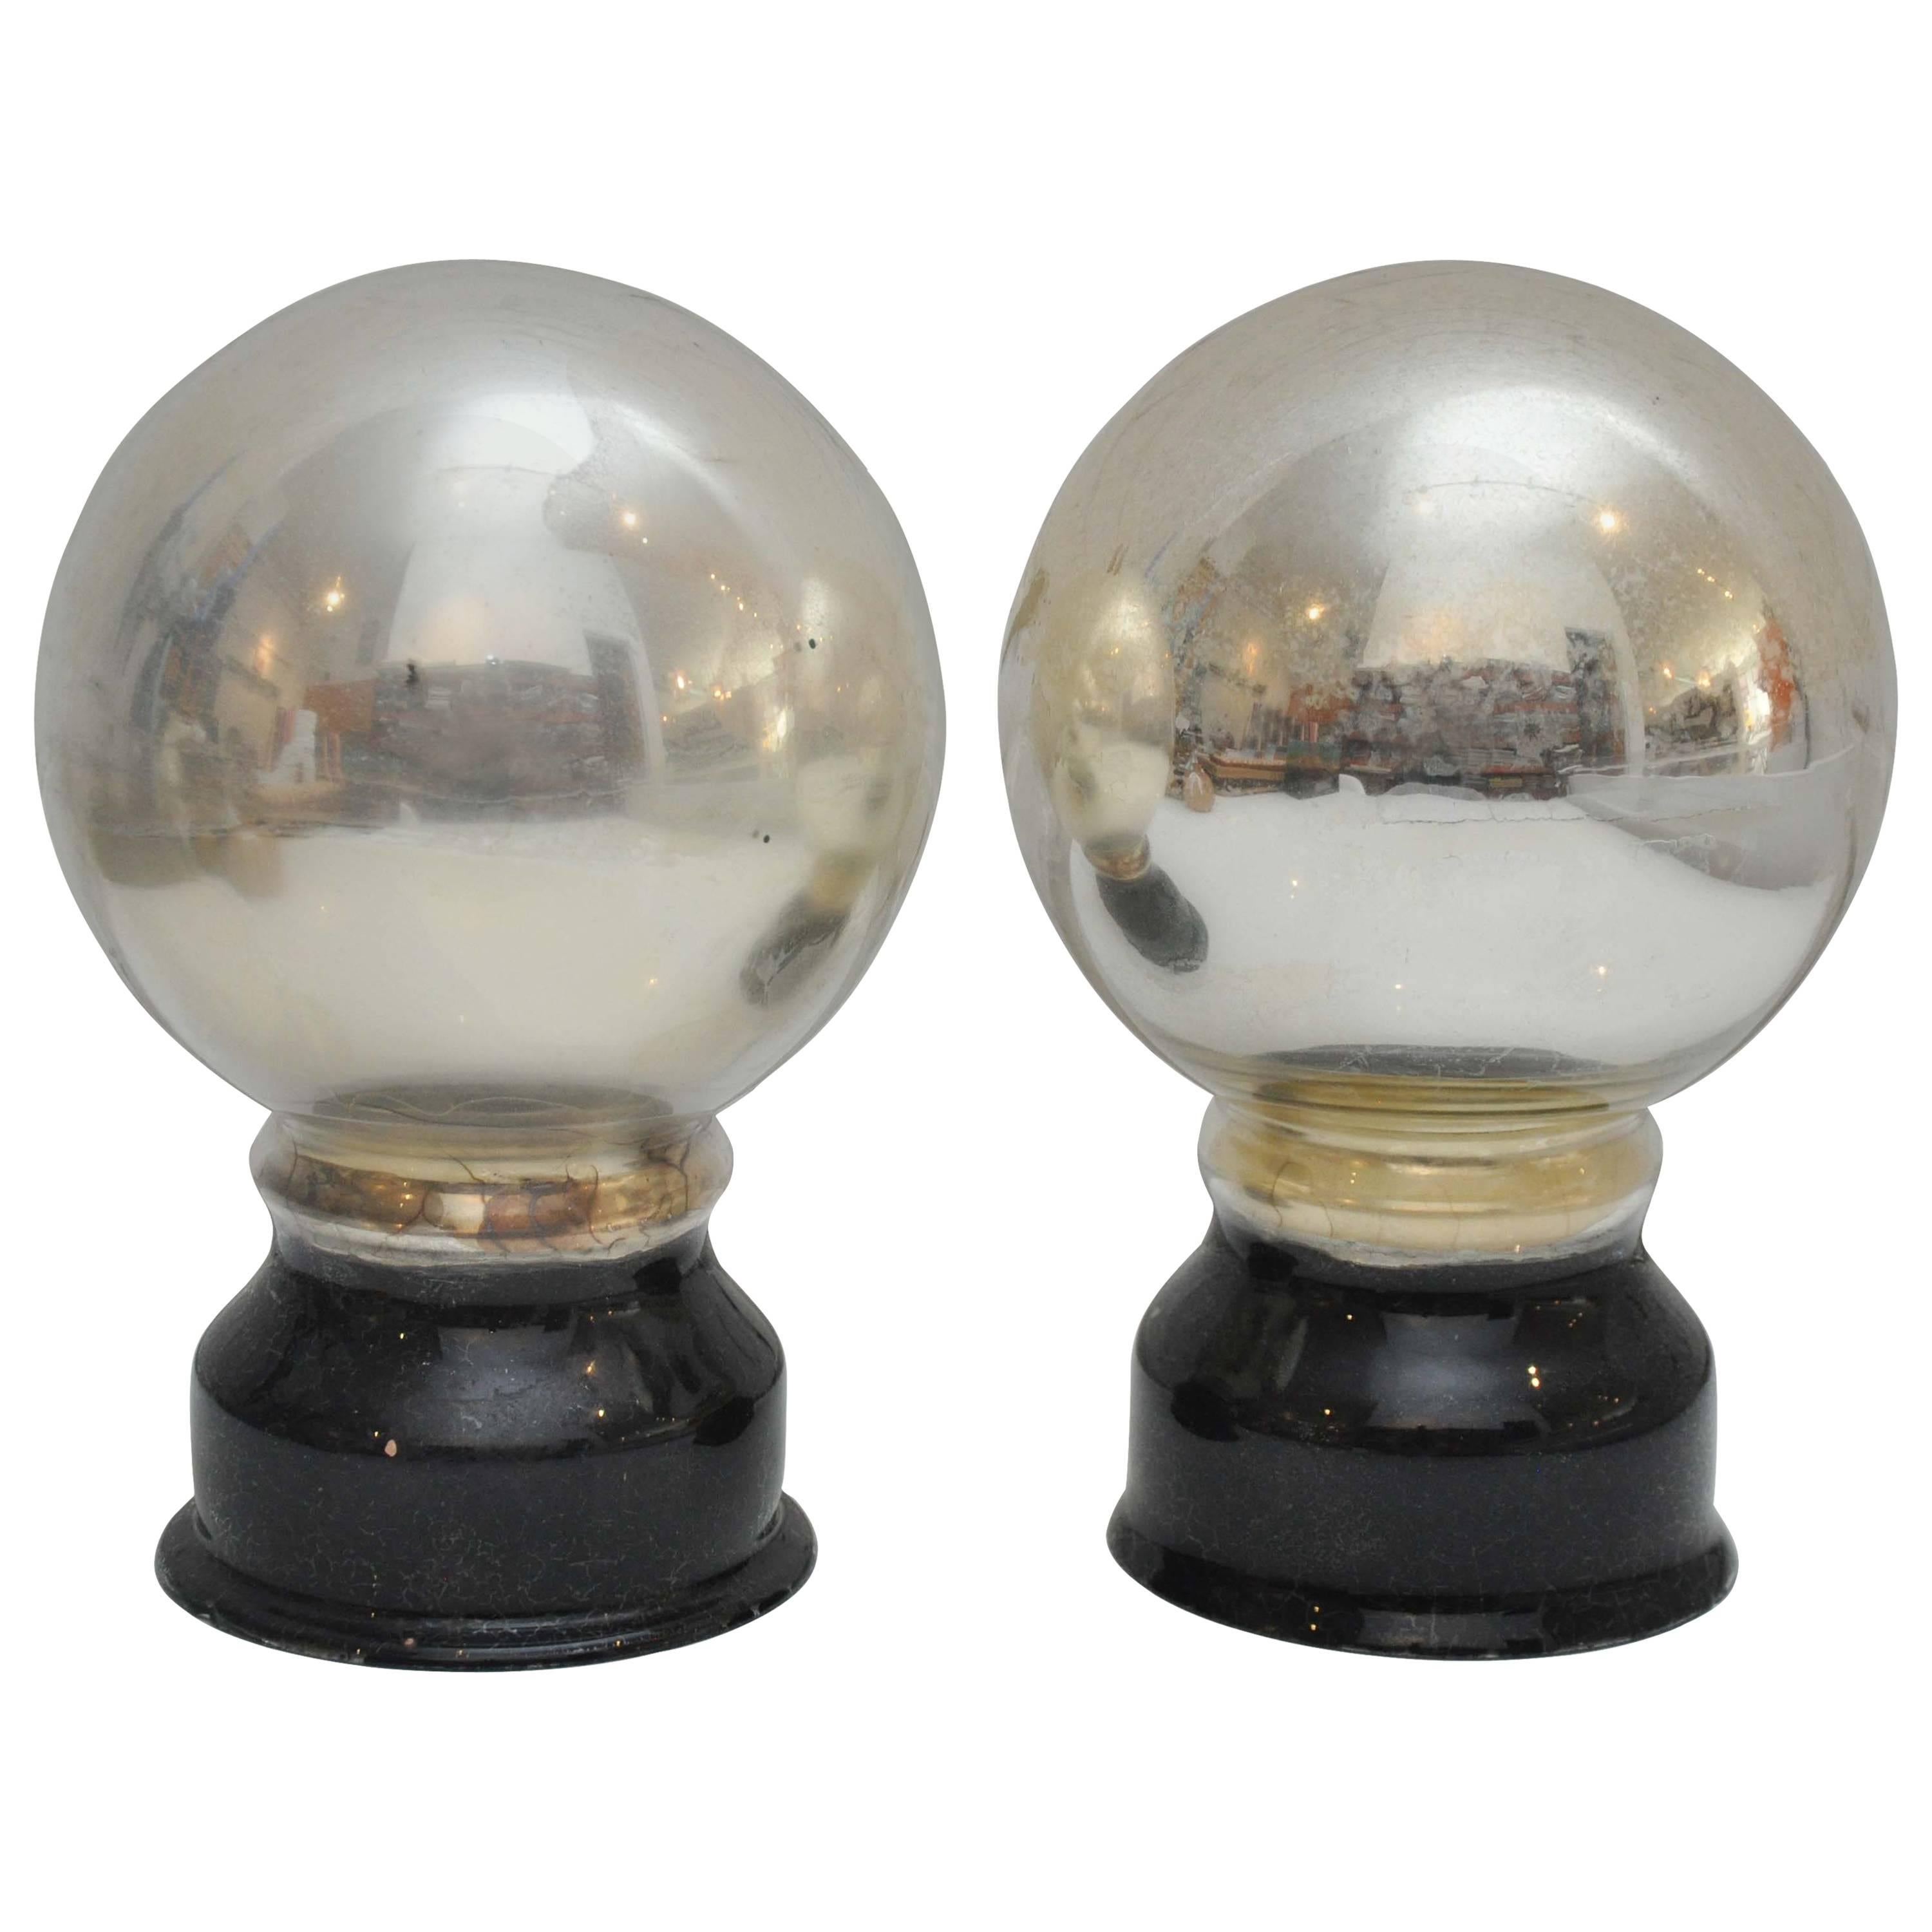 Antique Mercury Glass Butler's Balls